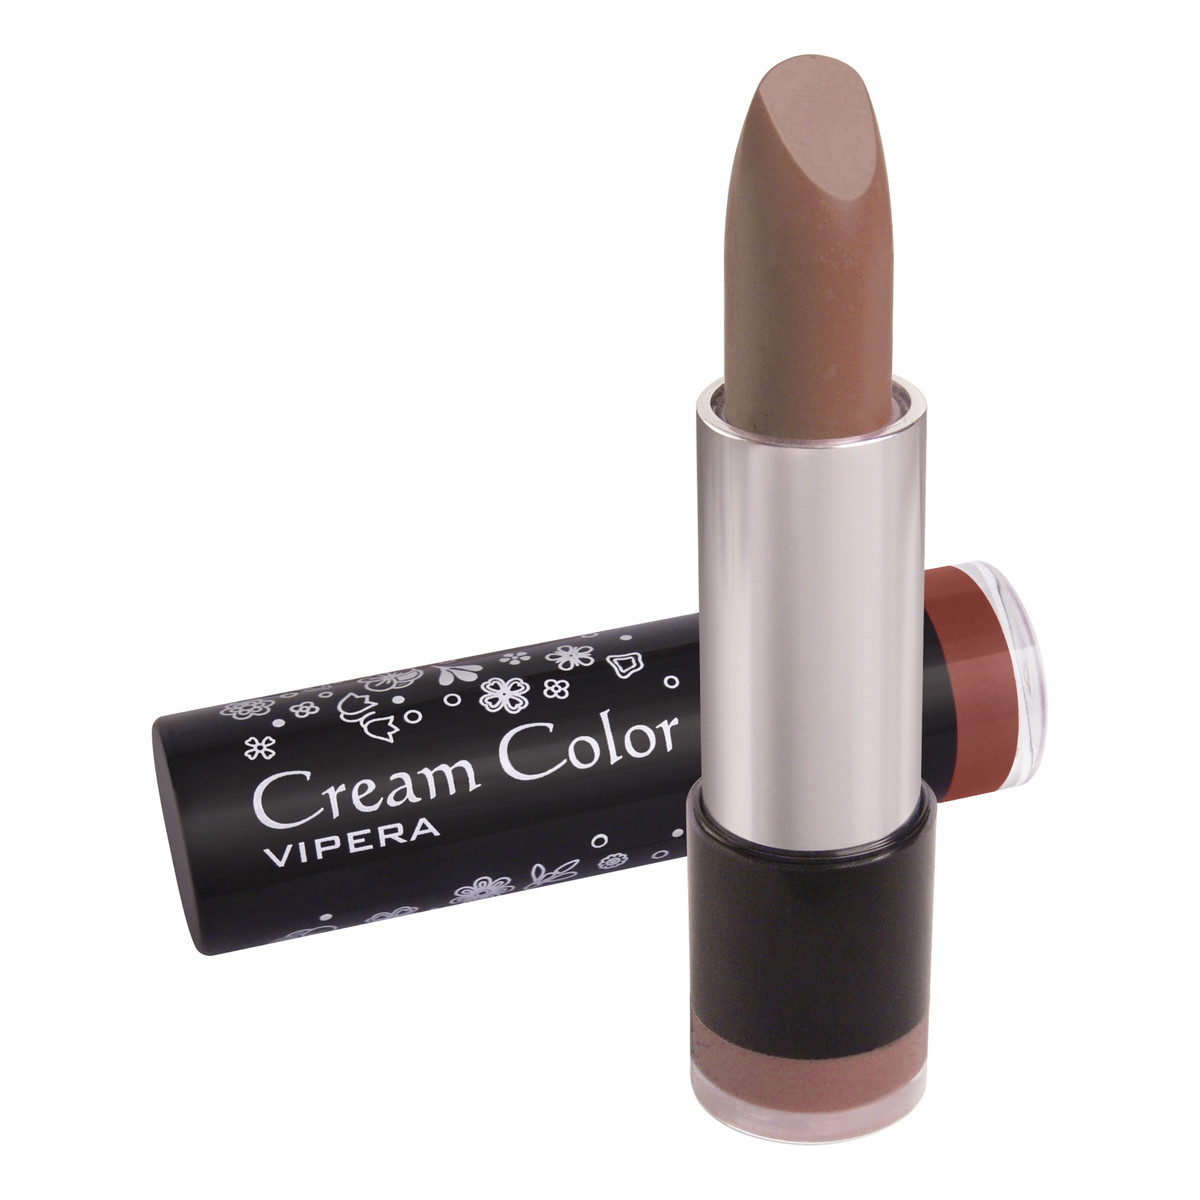 Vipera Cream Color bezperłowa szminka do ust 4g